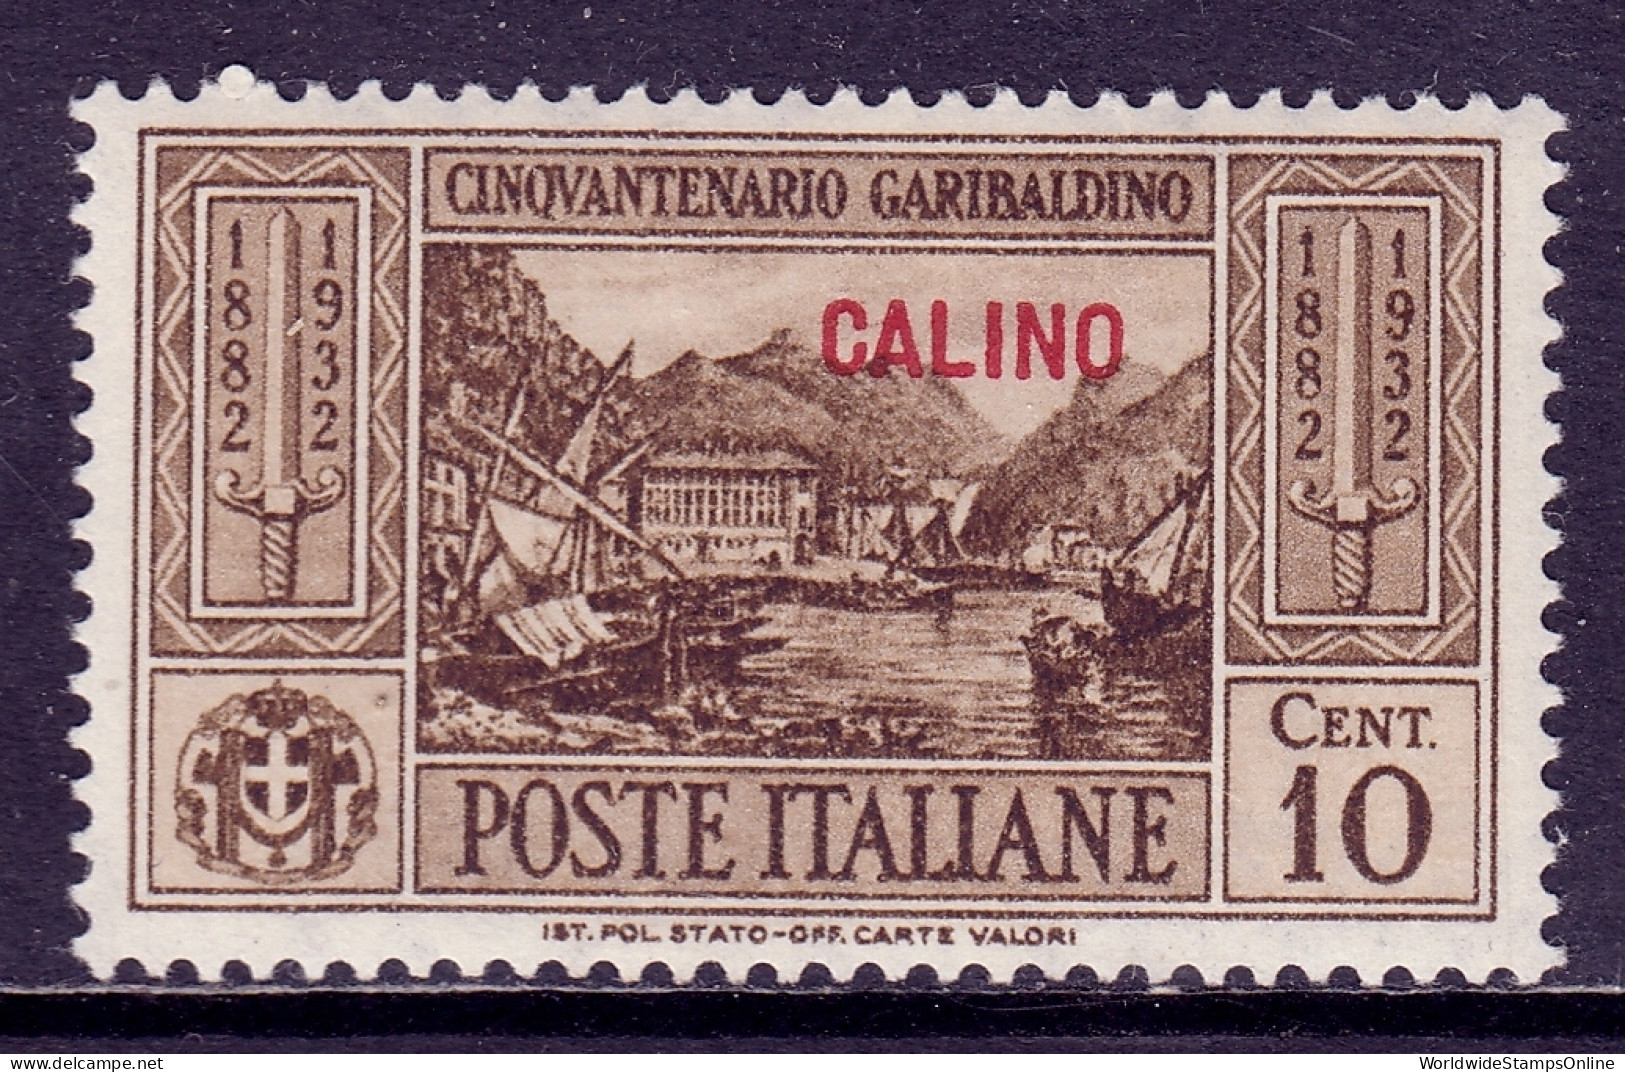 Italy (Calino) - Scott #17 - MH - SCV $18 - Ägäis (Calino)